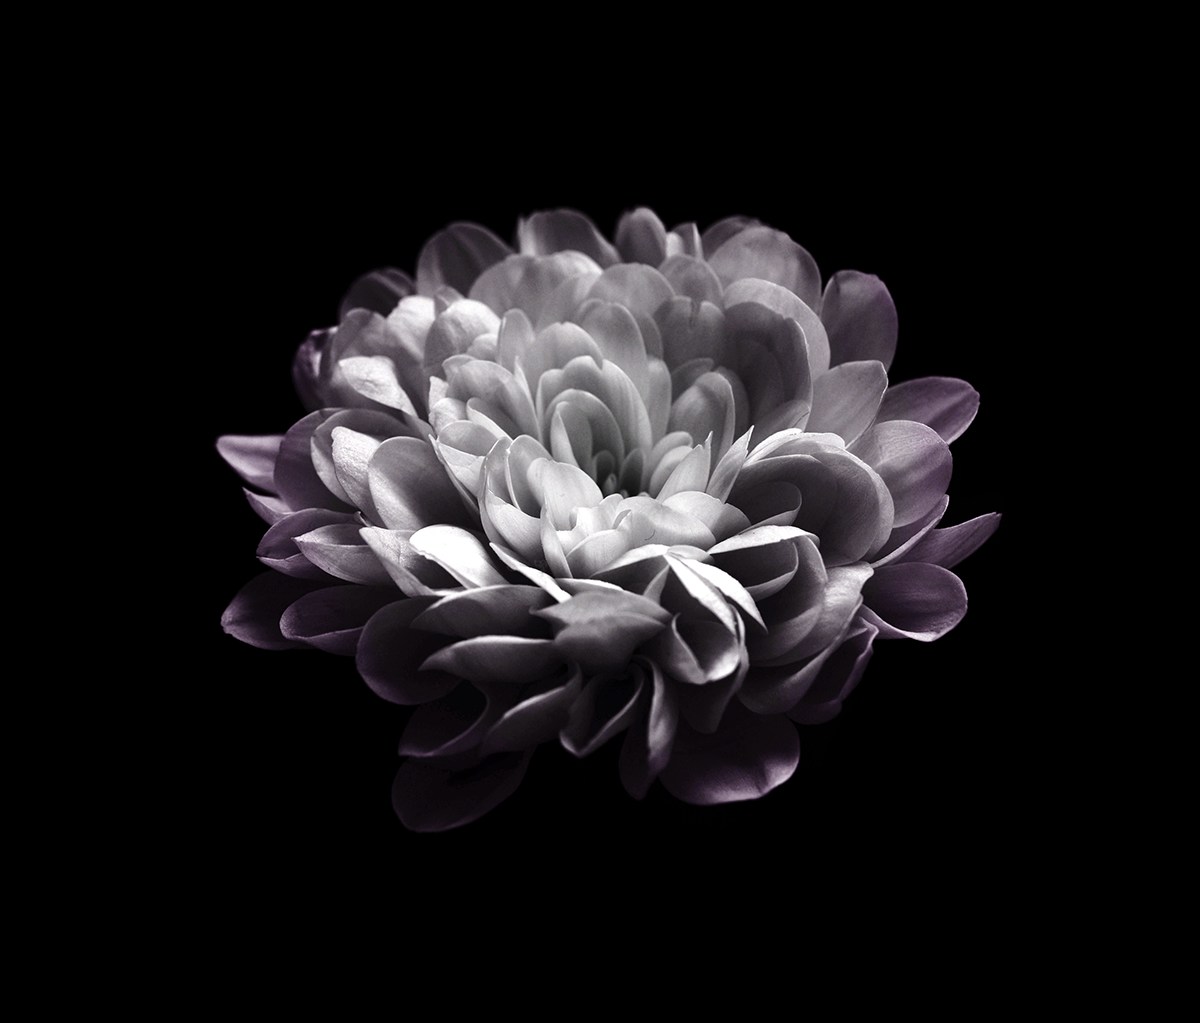 flower Chrysanthemum Nature bw black_and_white bnw violet Flowers macro